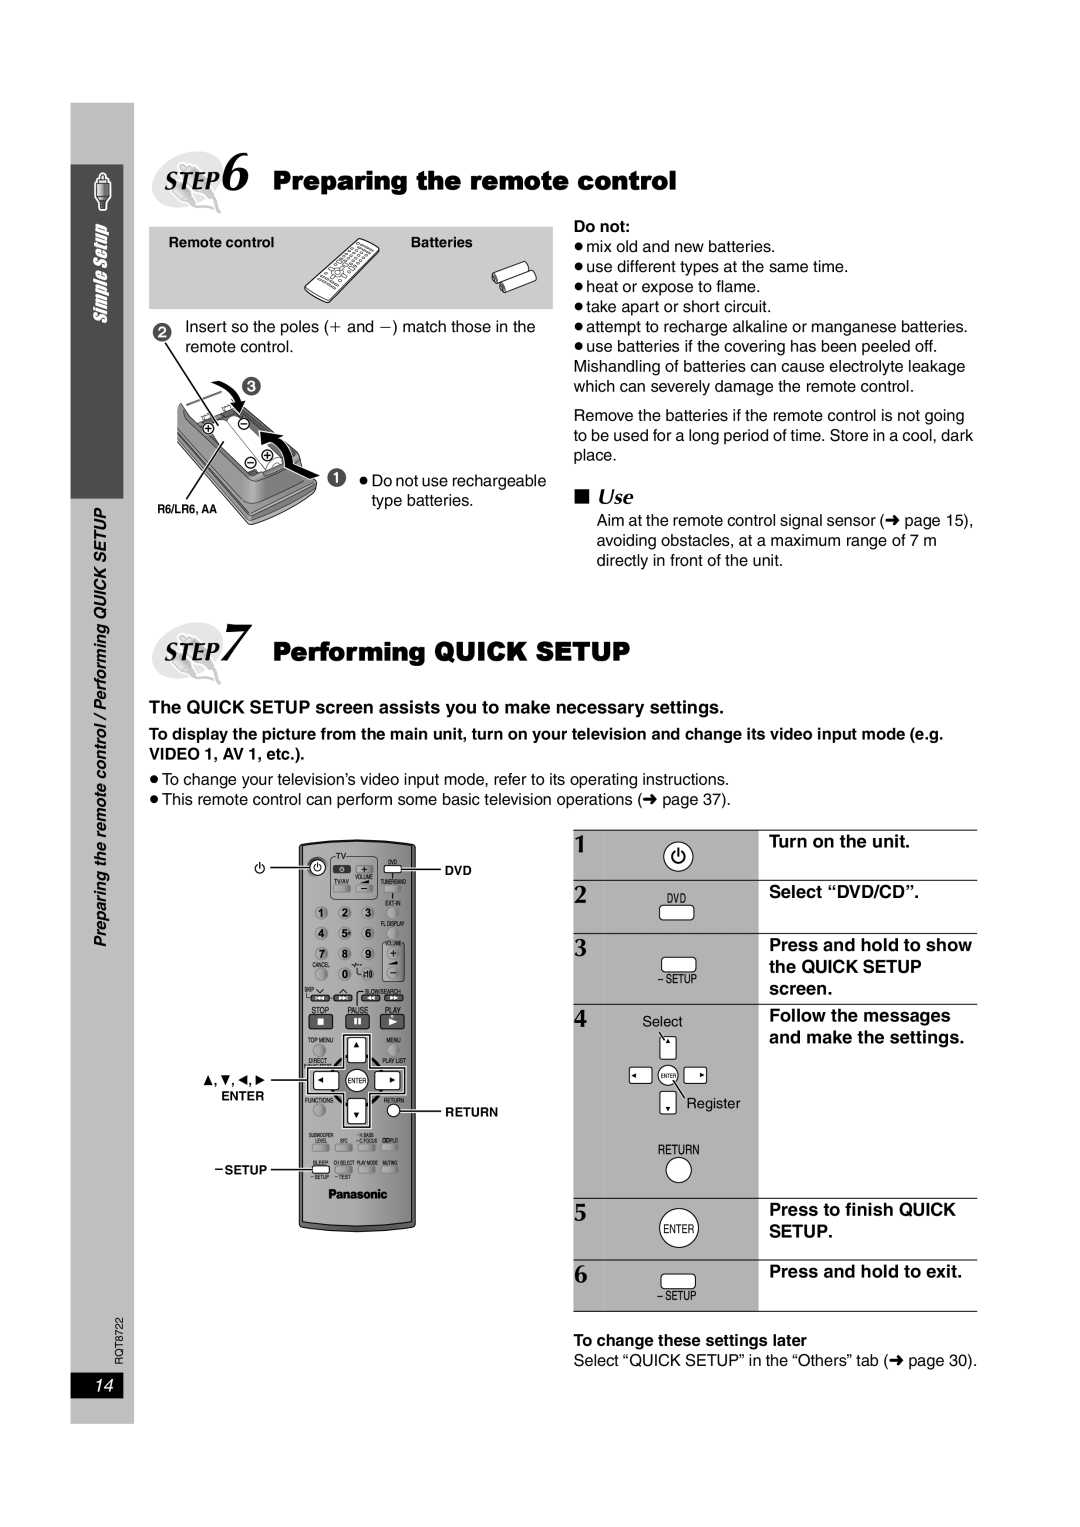 Panasonic SC-HT540, SC-HT990 Preparing the remote control, Performing QUICK SETUP, ∫Use, Simple Setup, Do not, Quick Setup 